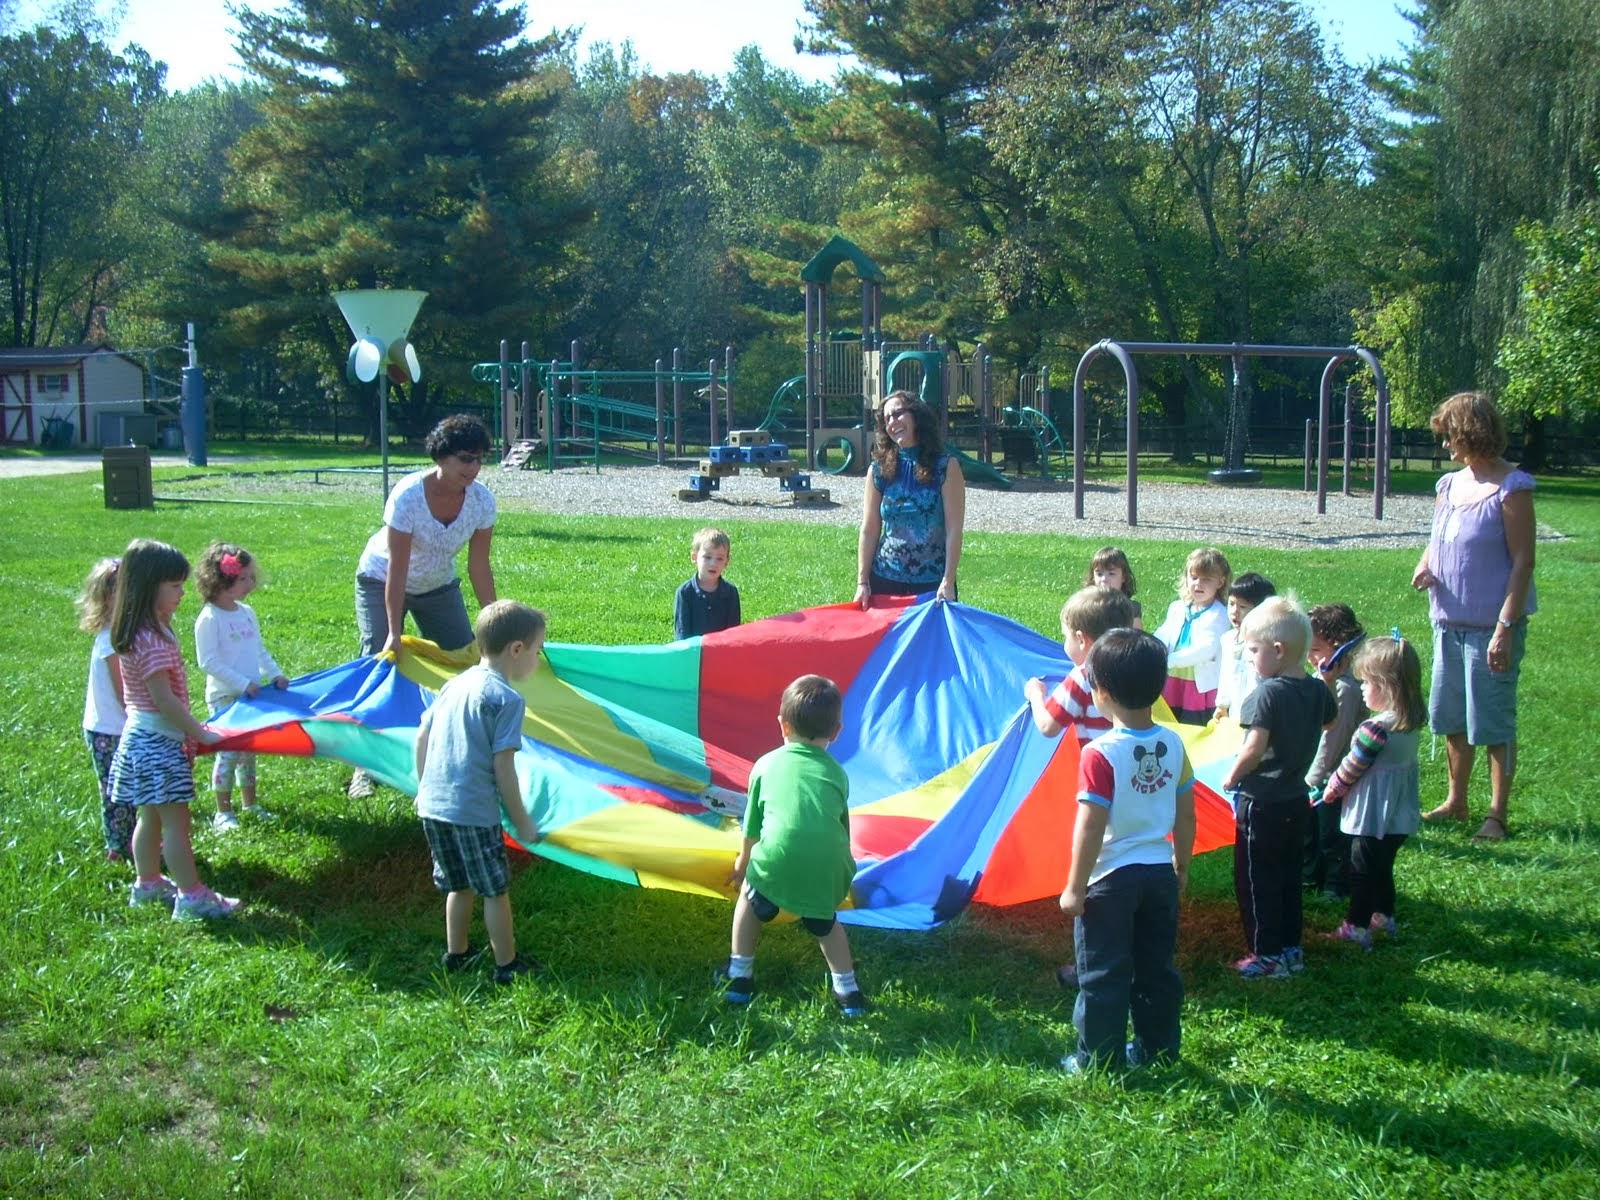 Learning rhythm and colors through parachute fun